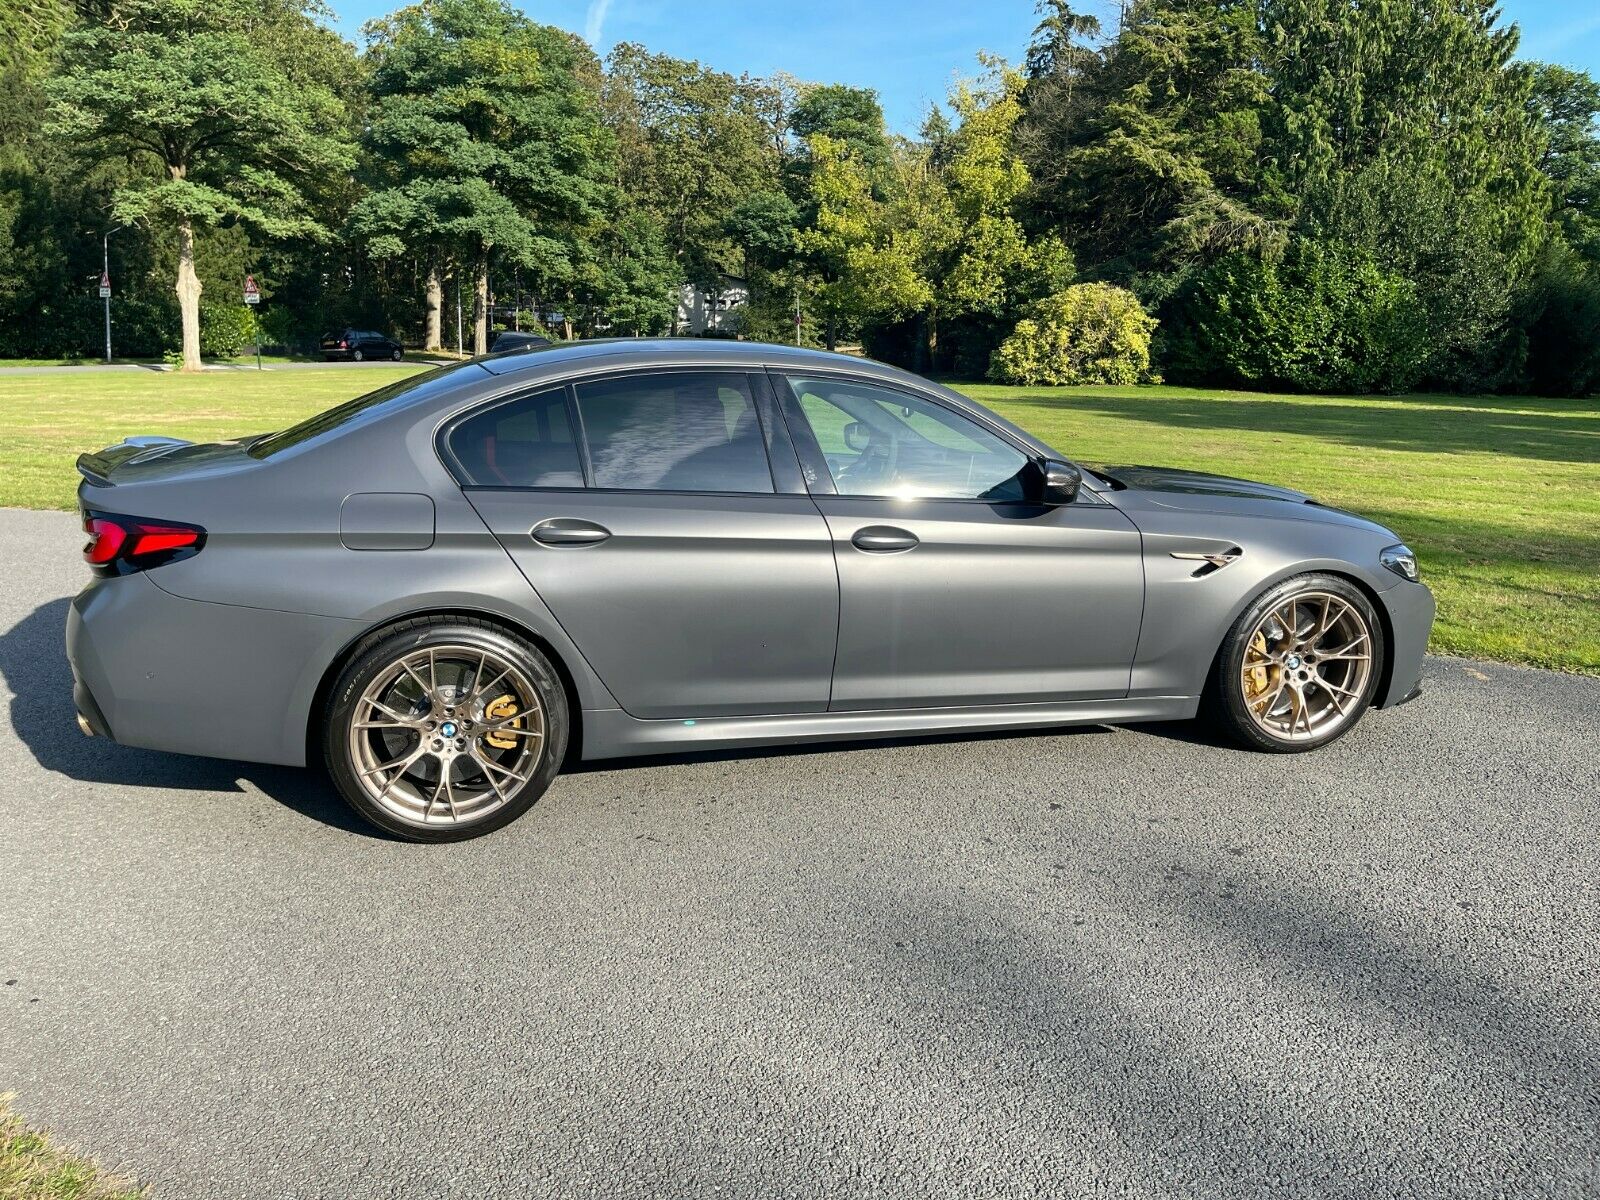 BMW M5 CS side